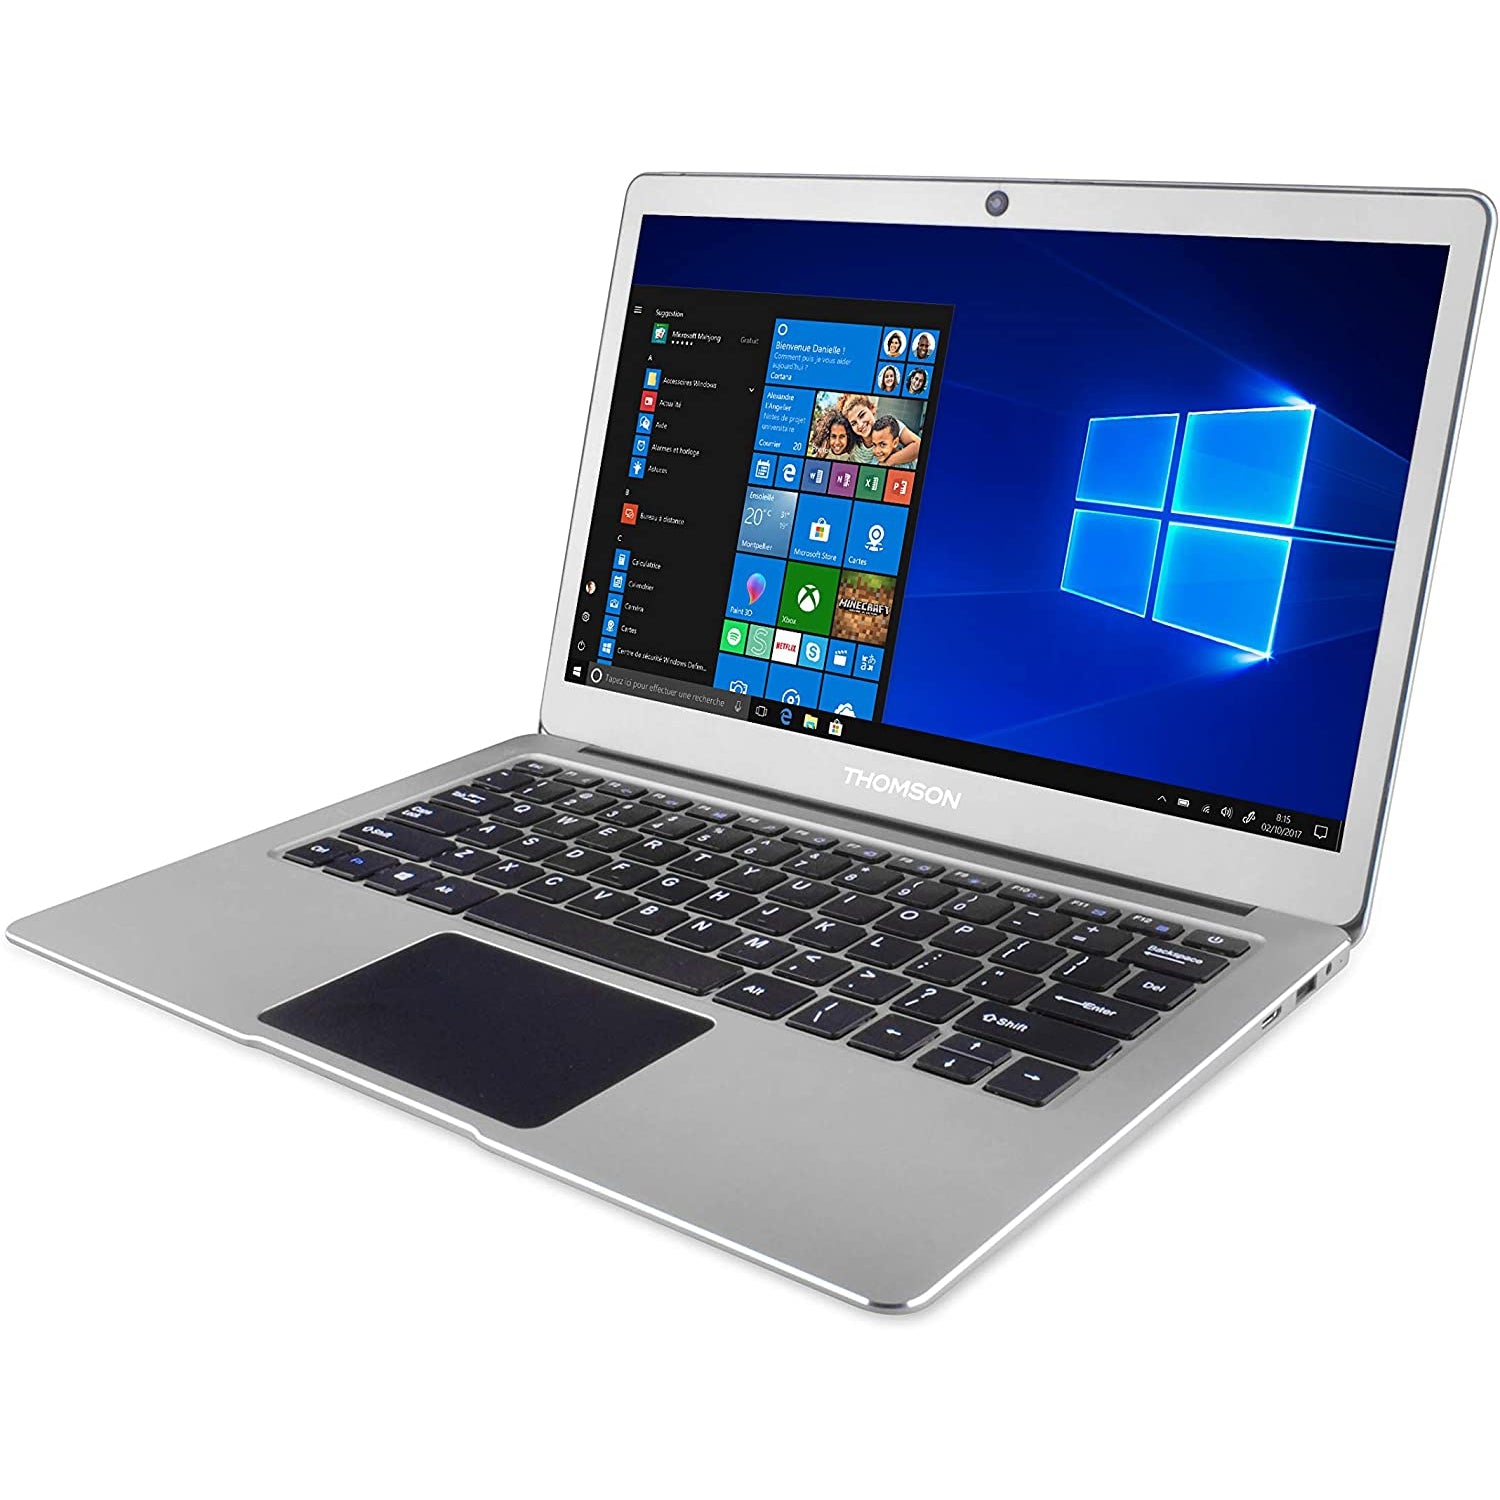 Thomson Neox Ultrabook - Intel Celeron, 2GB RAM, 32GB SSD, 13.3" - Silver